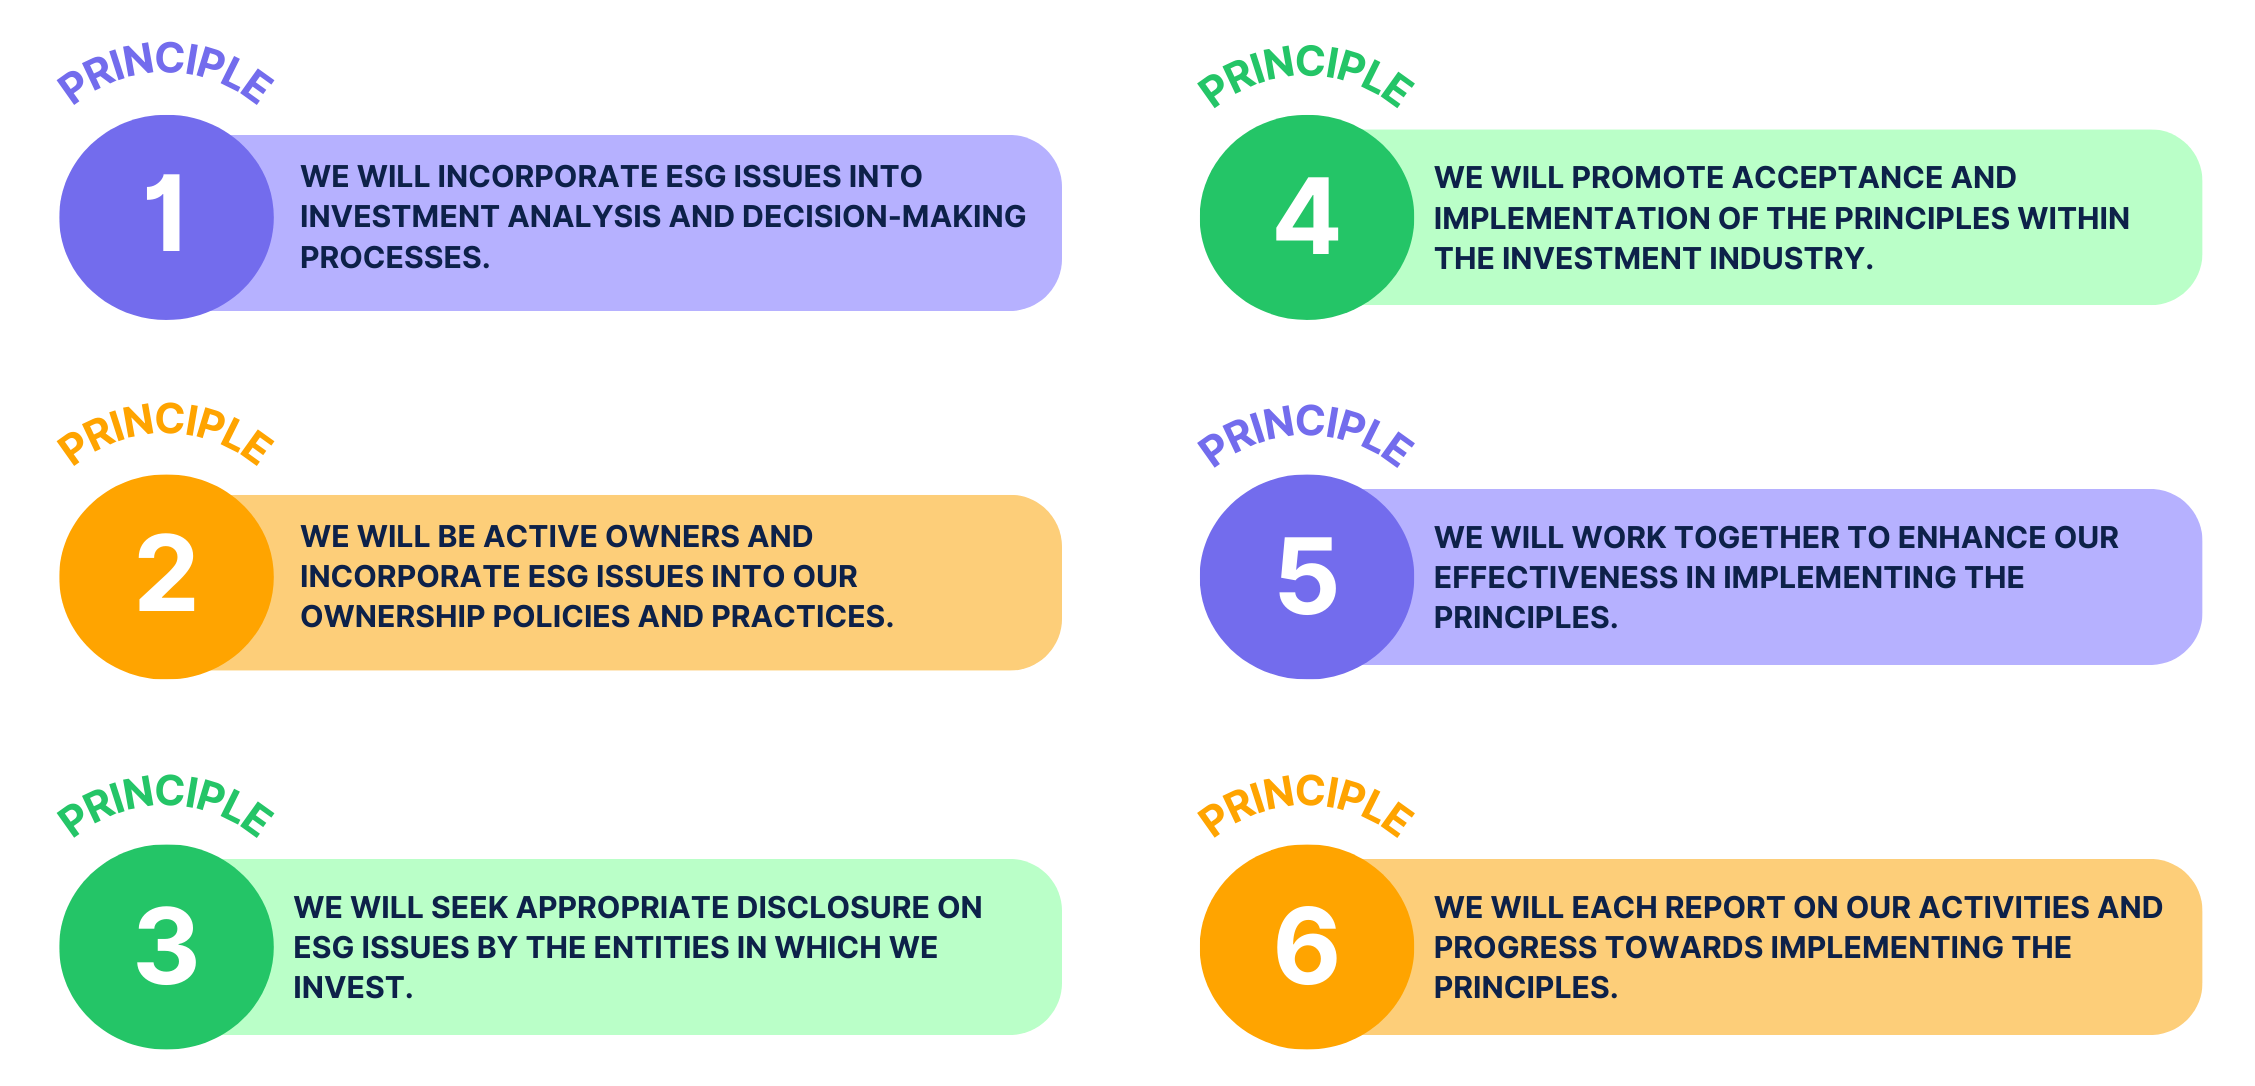  six principles of the PRI